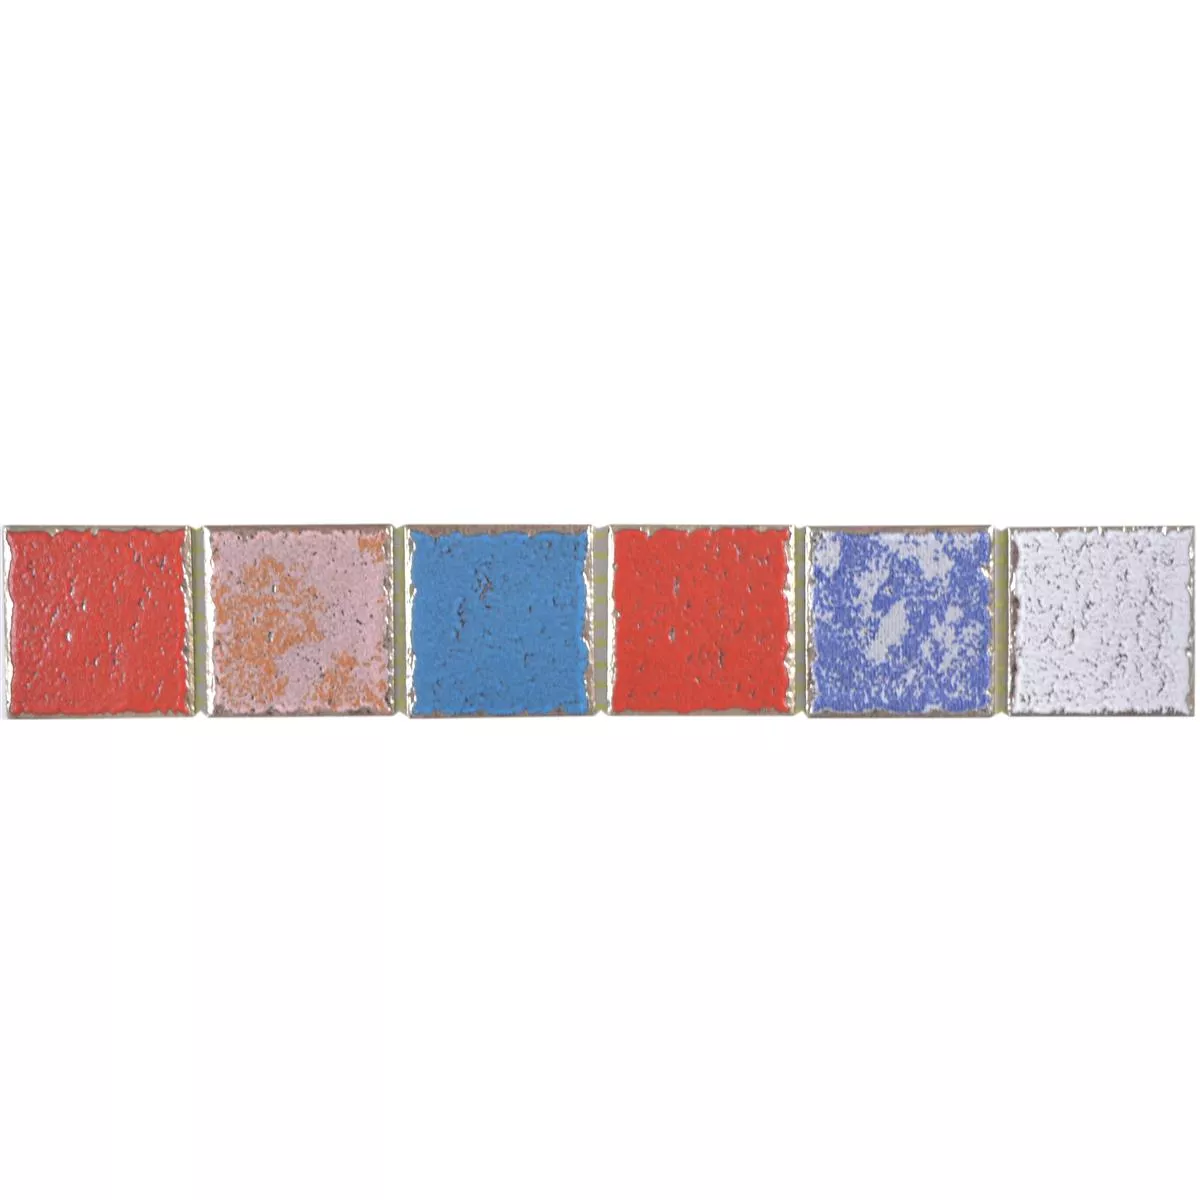 Ceramic Tiles Border Paradox Colored Mix